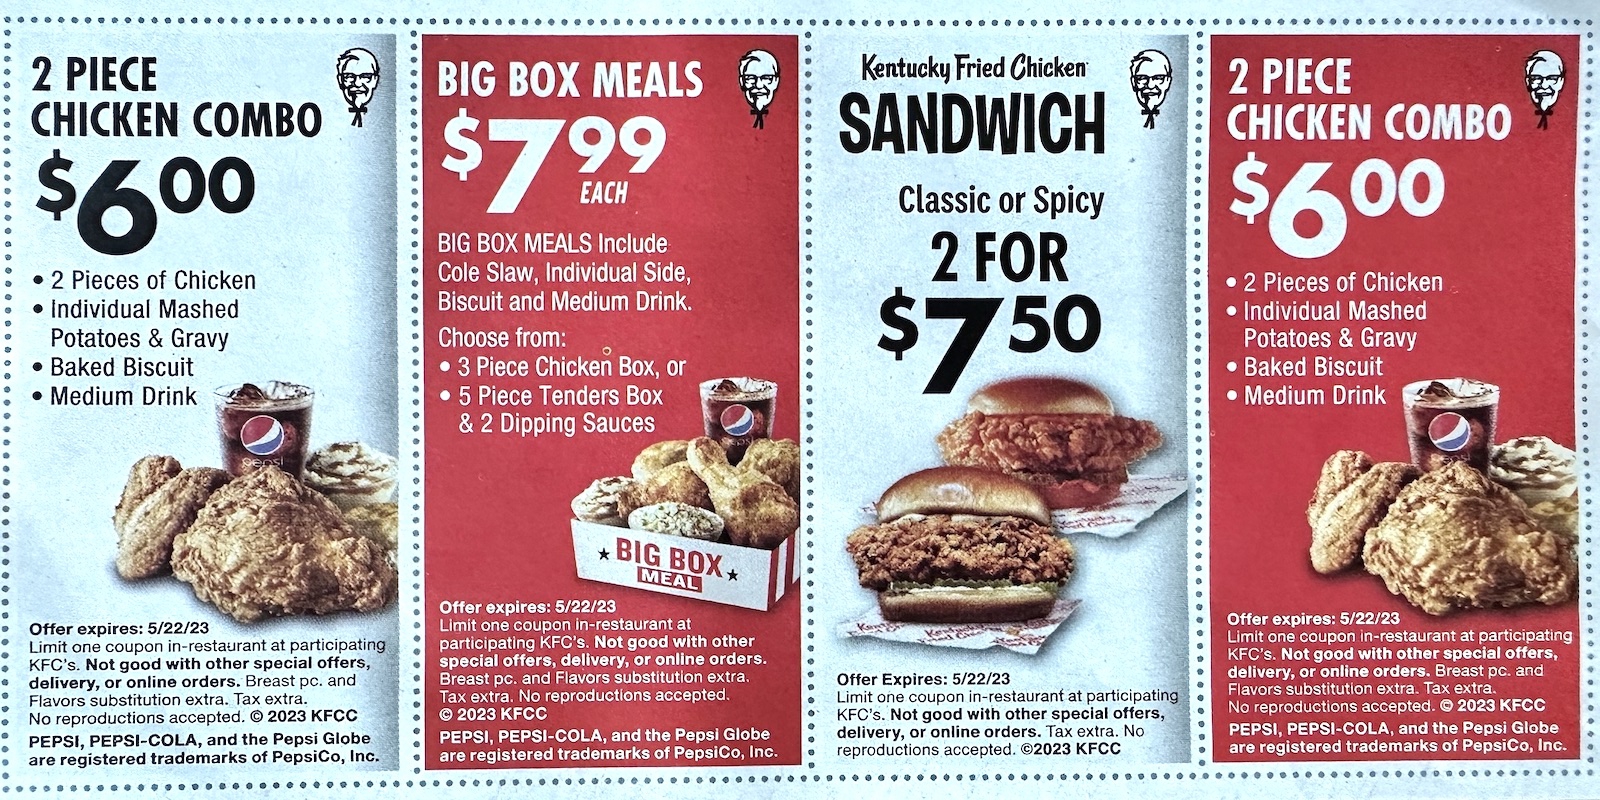 KFC - Kentucky Fried Chicken Coupons Deals - Expires 5/22/2023